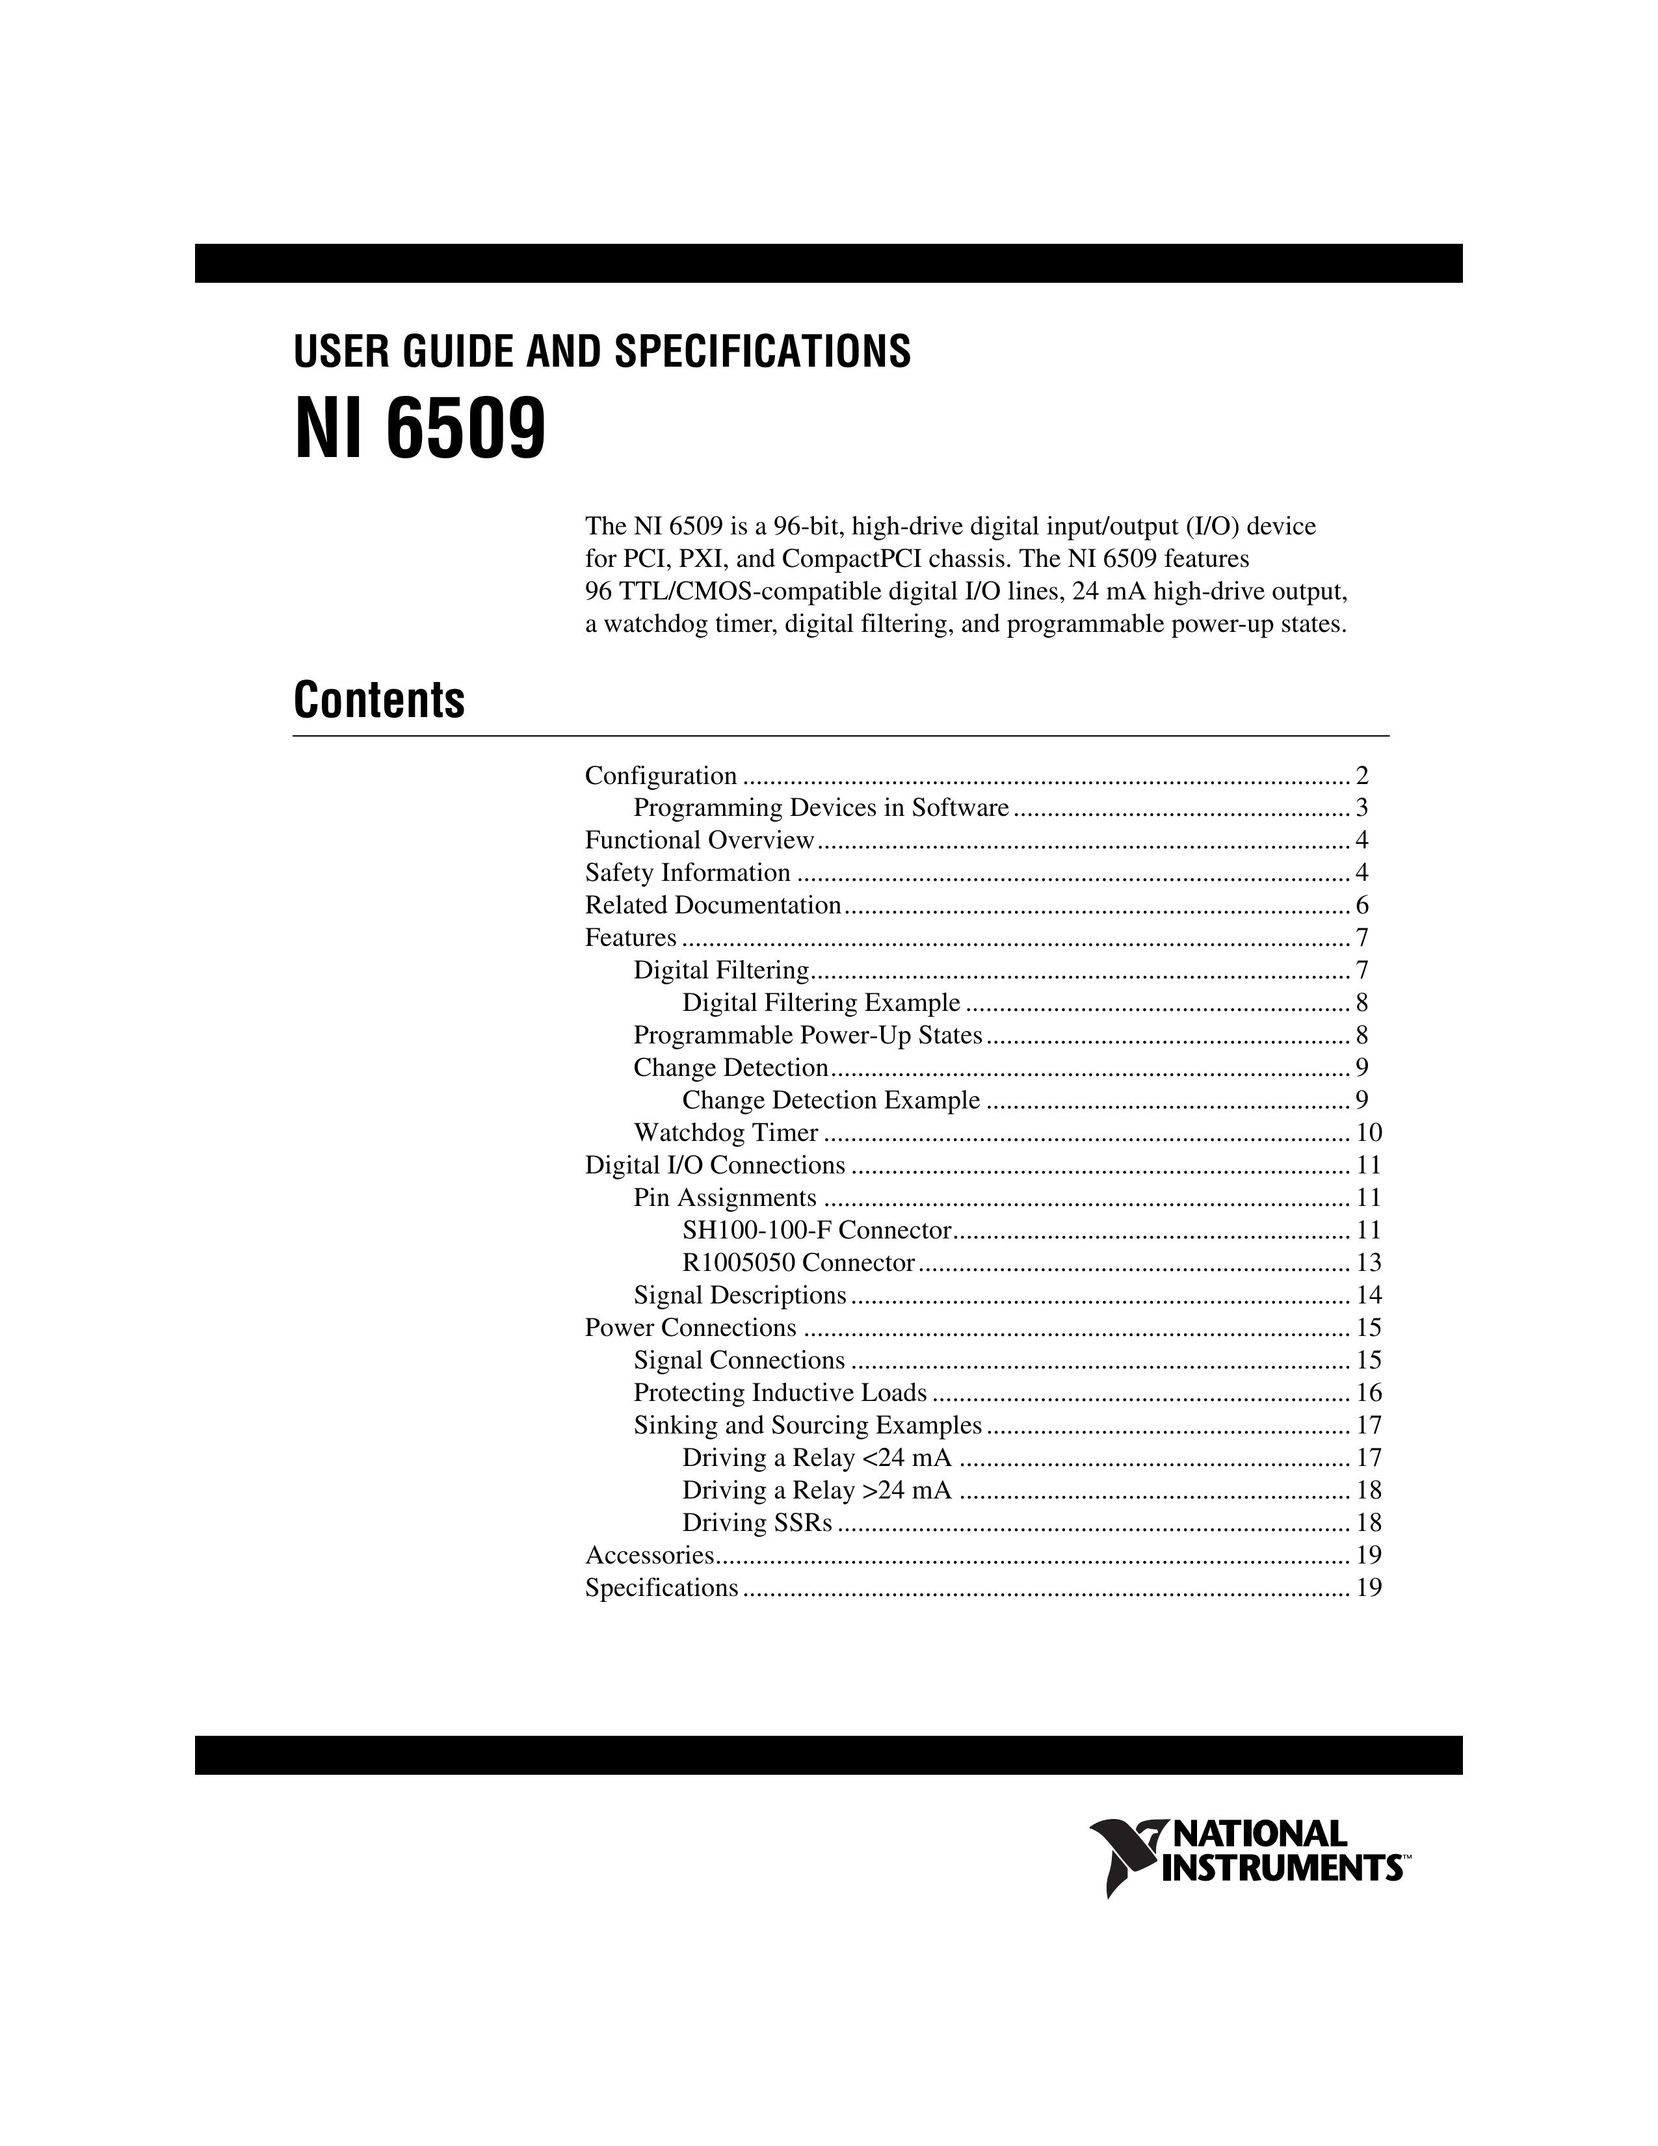 National Instruments NI 6509 Network Card User Manual